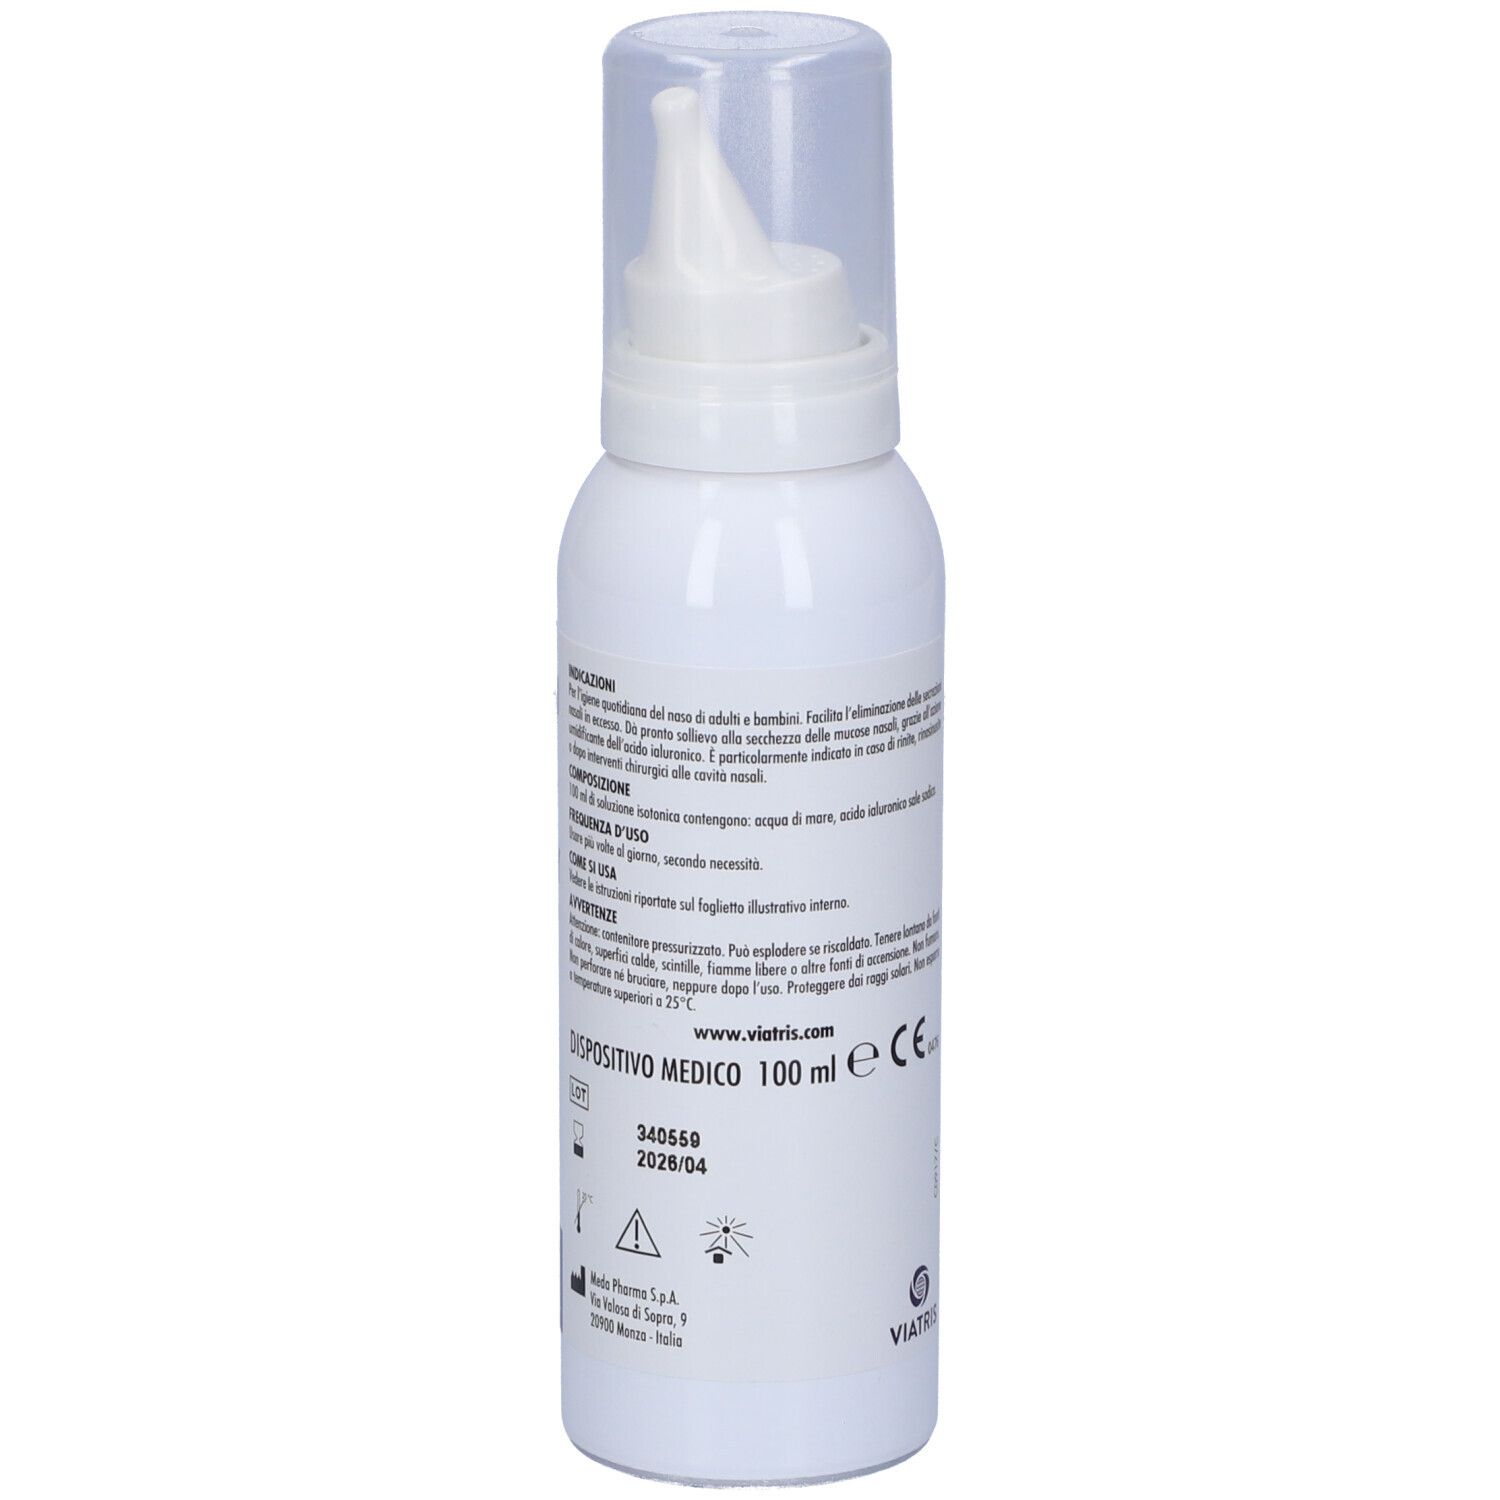 IaluMar® Soluzione Isotonica Spray Nasale